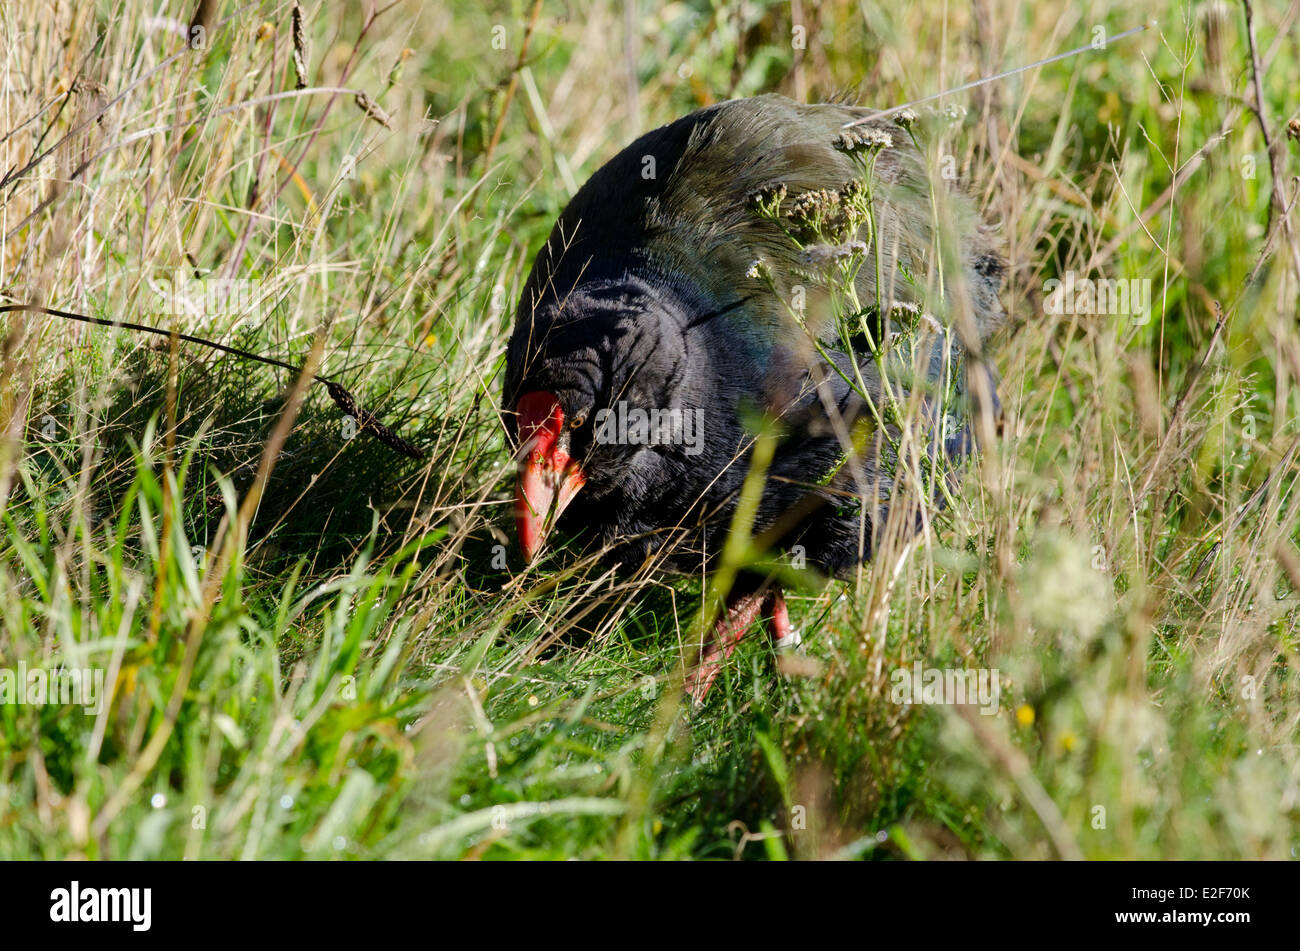 New Zealand, Wellington. Zealandia, Karori Sanctuary. South Island Takahe (Porphyrio hochstetteri) bird. Stock Photo